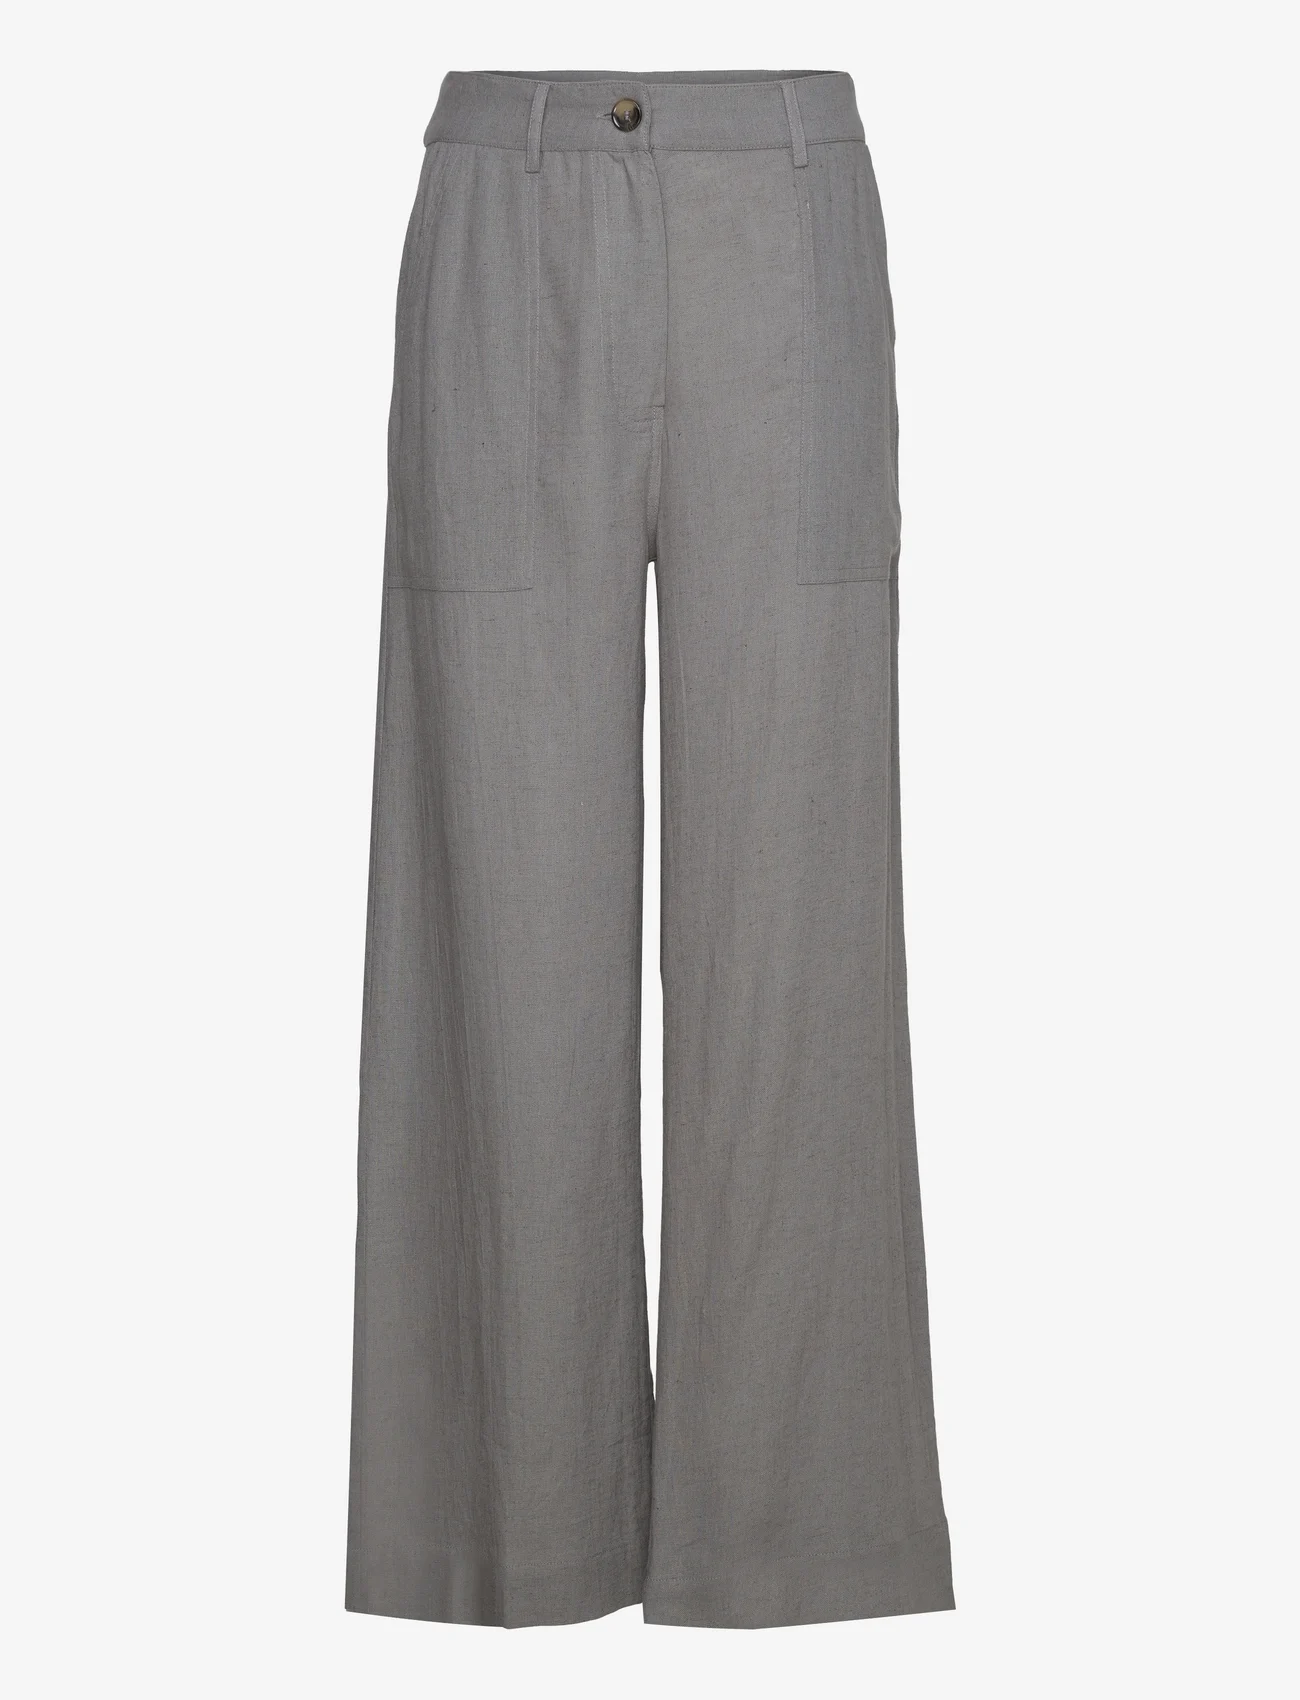 Sofie Schnoor - Trousers - lina bikses - steel grey - 0